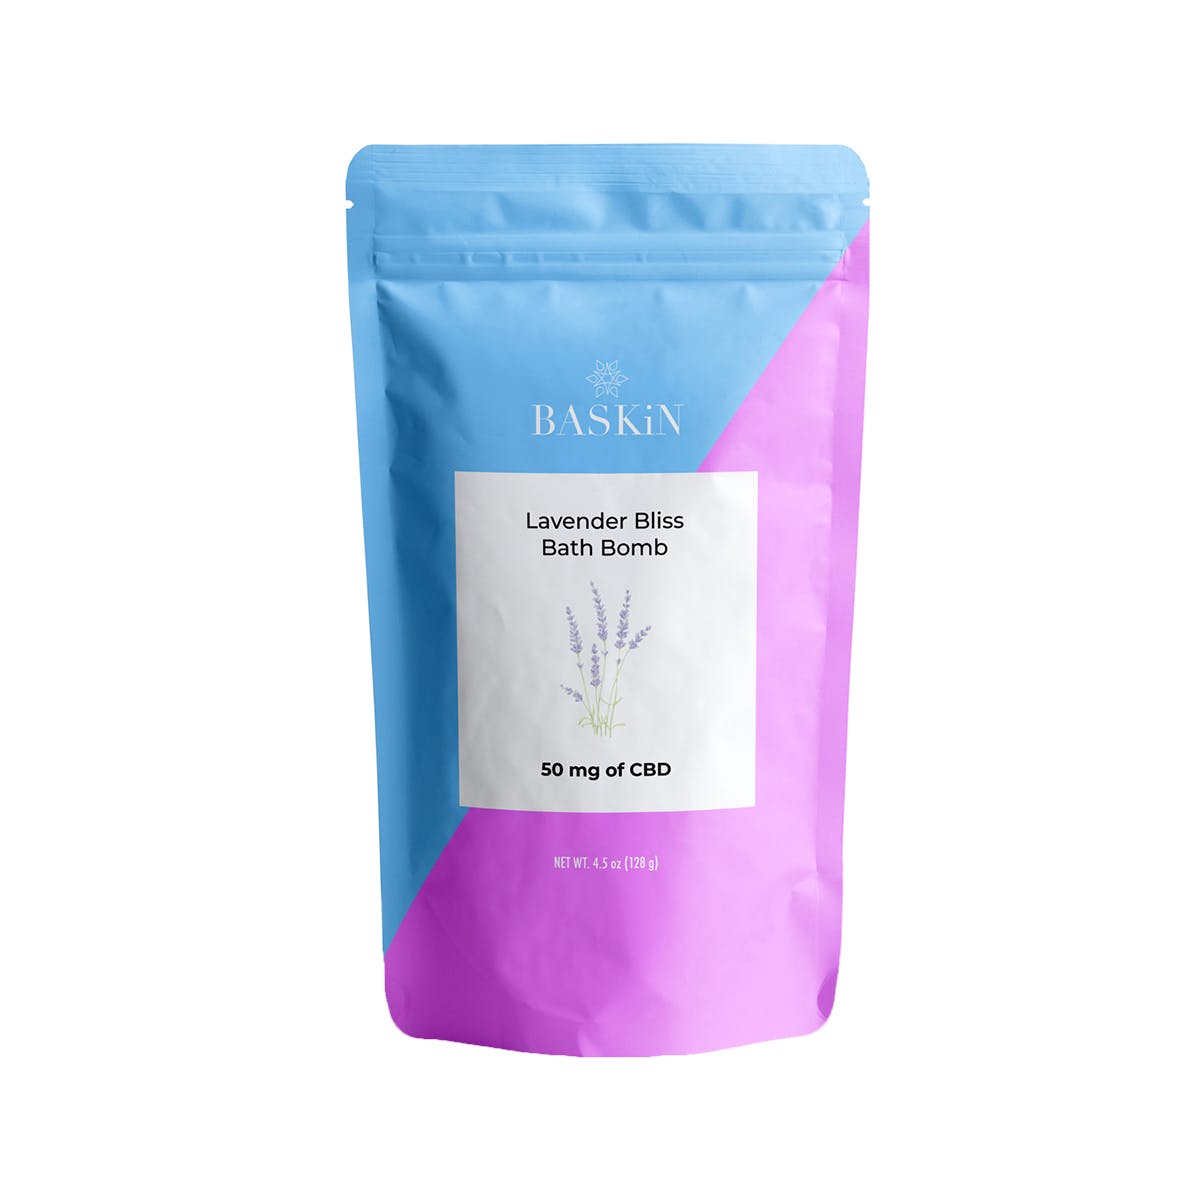 BaskiN Lavender Bliss Bath Bomb – 50mg of CBD